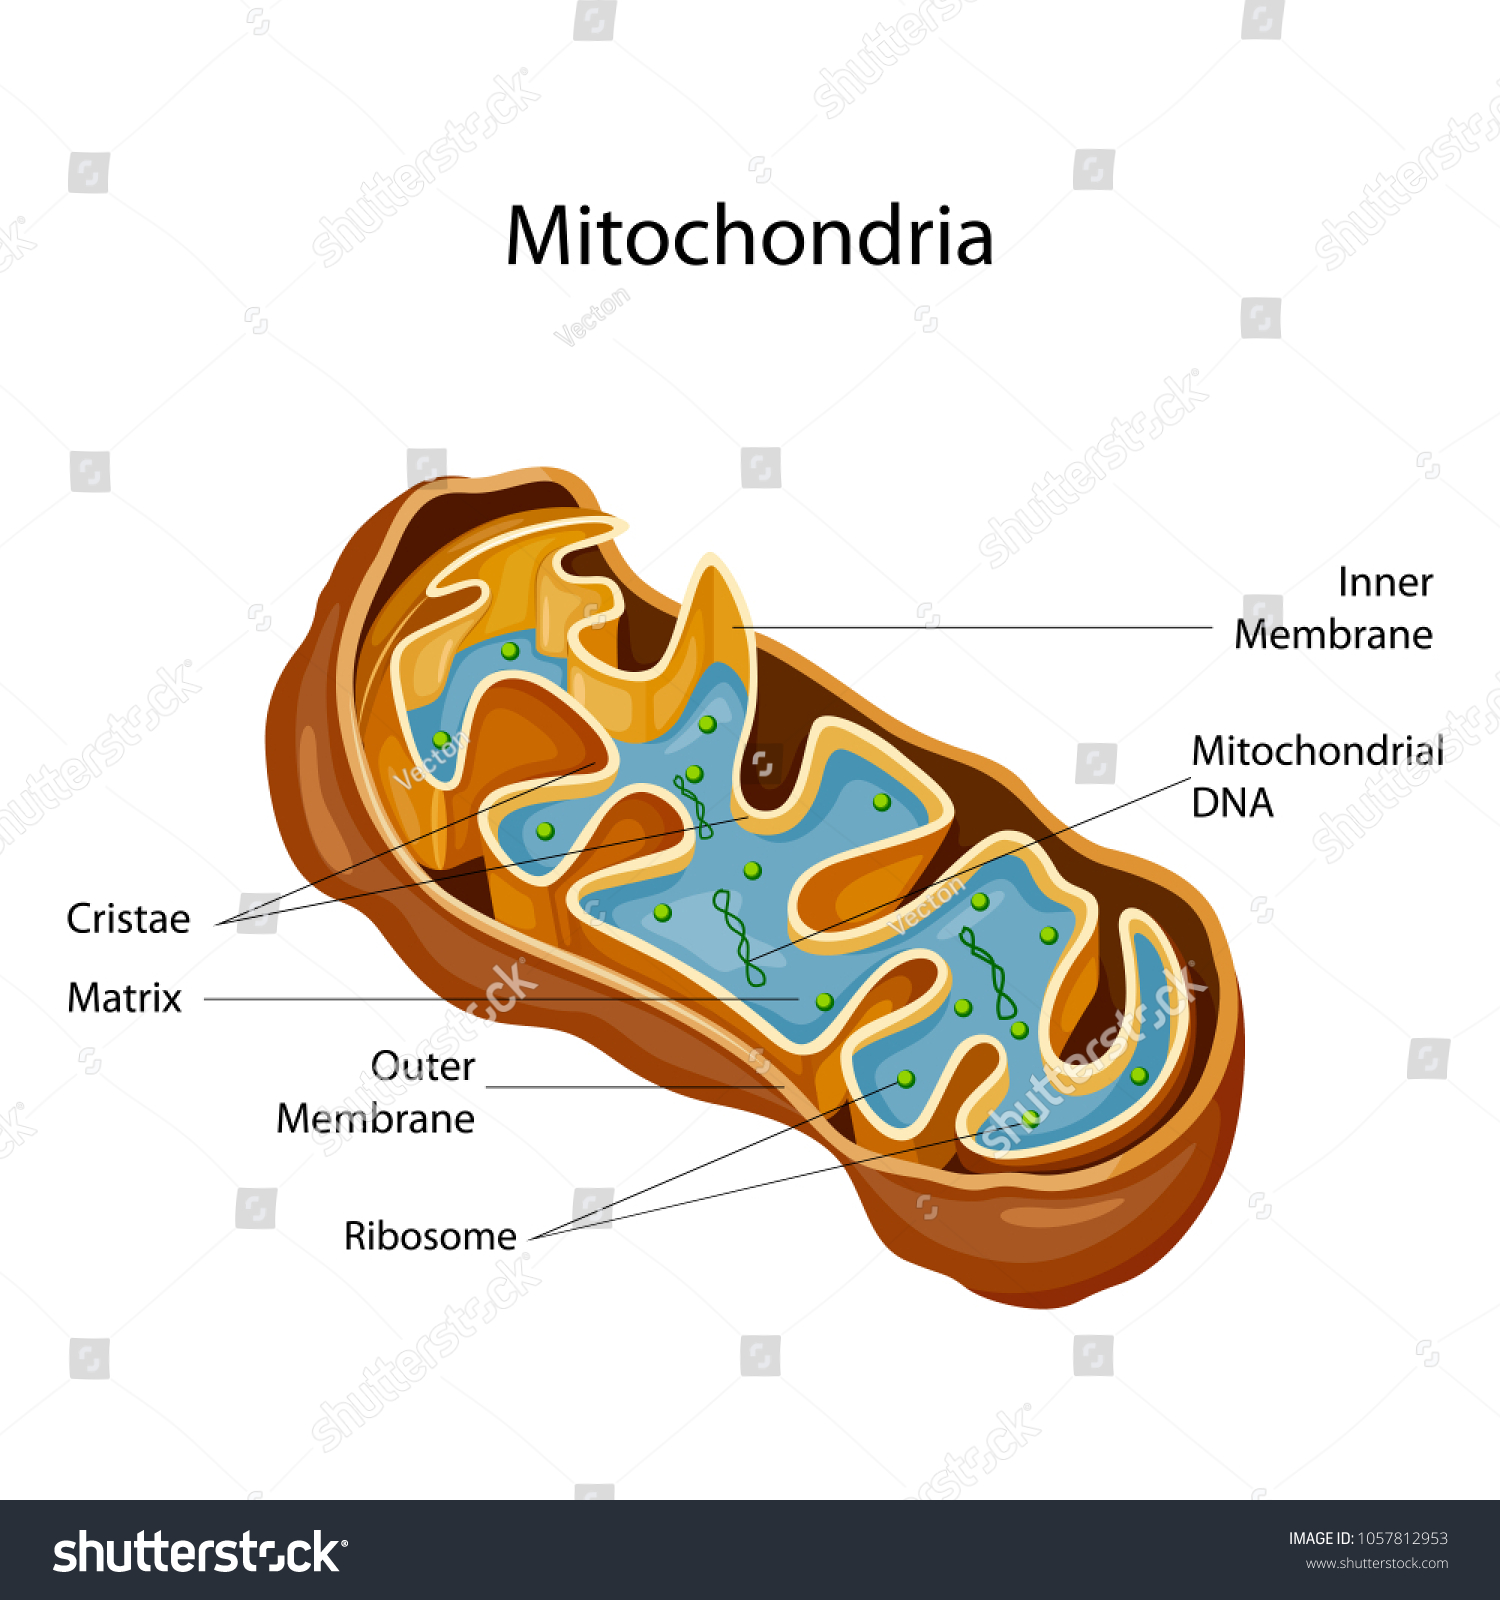 Mitochondria 9 Ways